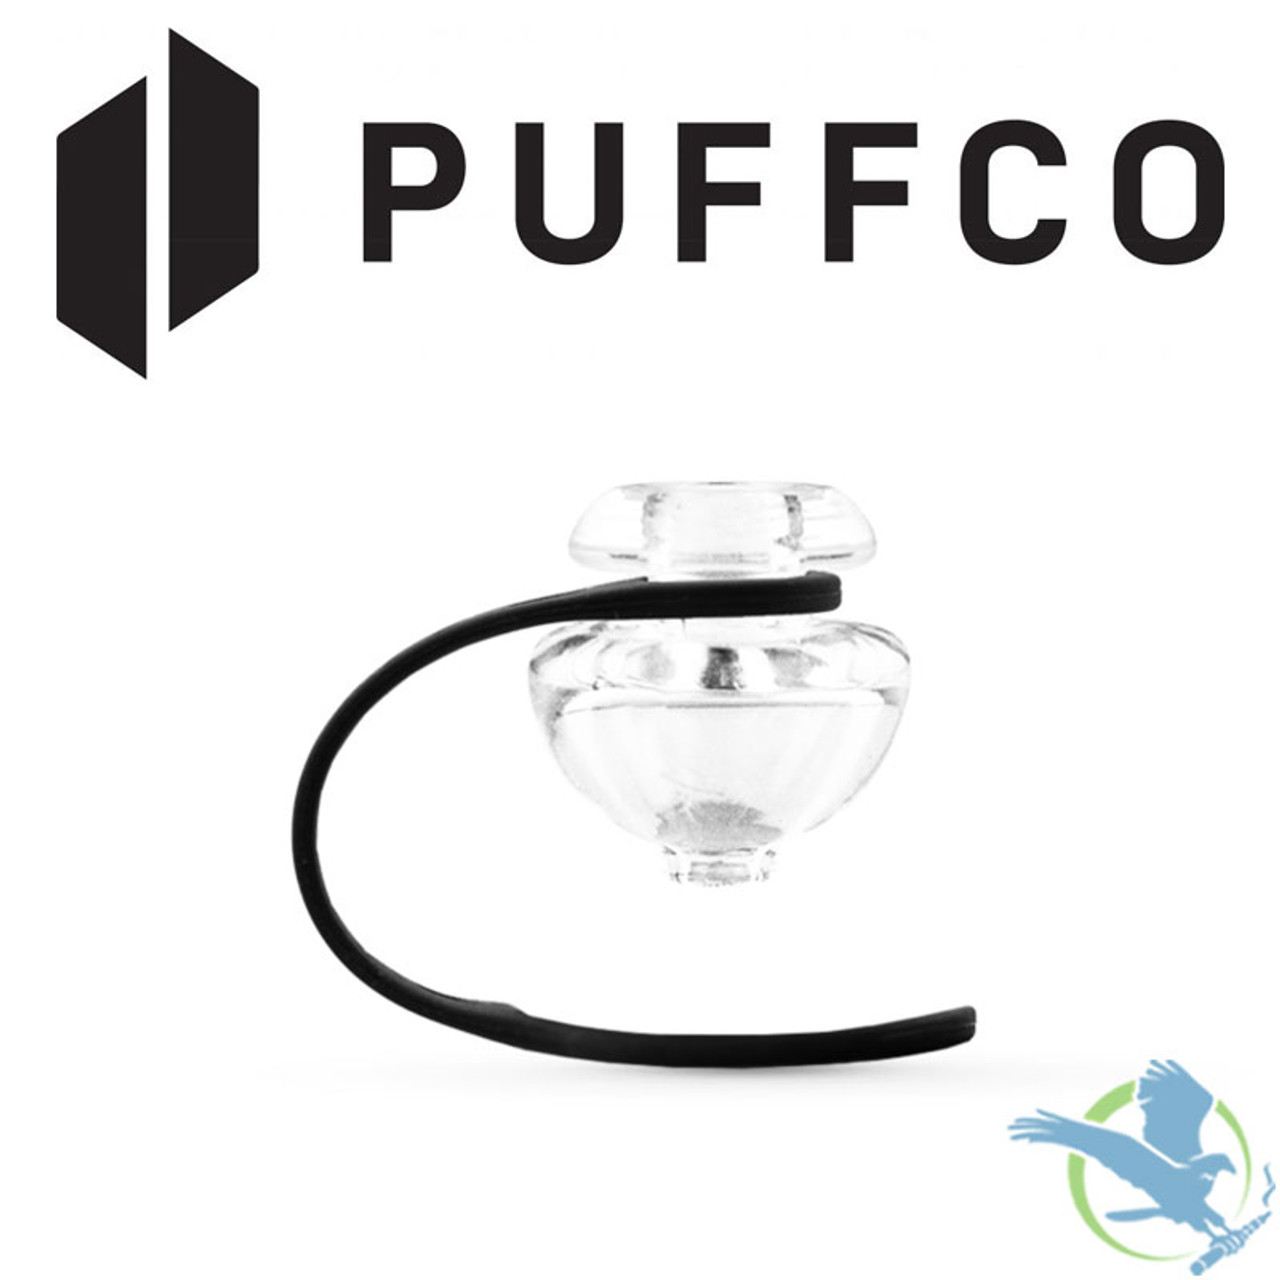 Puffco Peak Pro Directional Ball Carb Cap